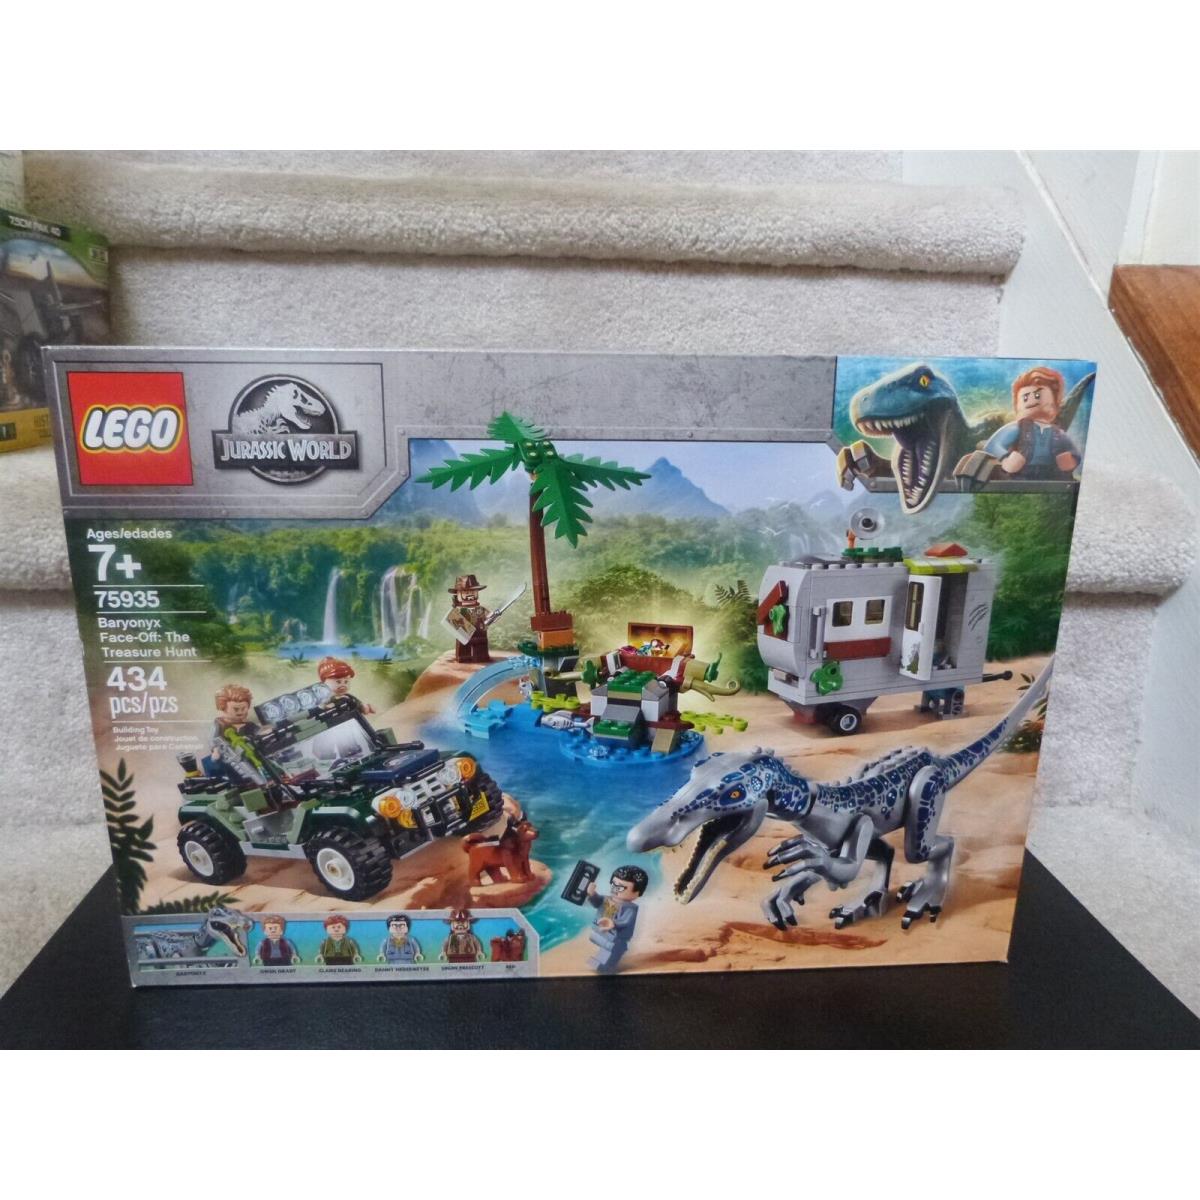 Box Lego Jurassic World 75935 Baryonyx Face-off Treasure Hunt 100%DEM